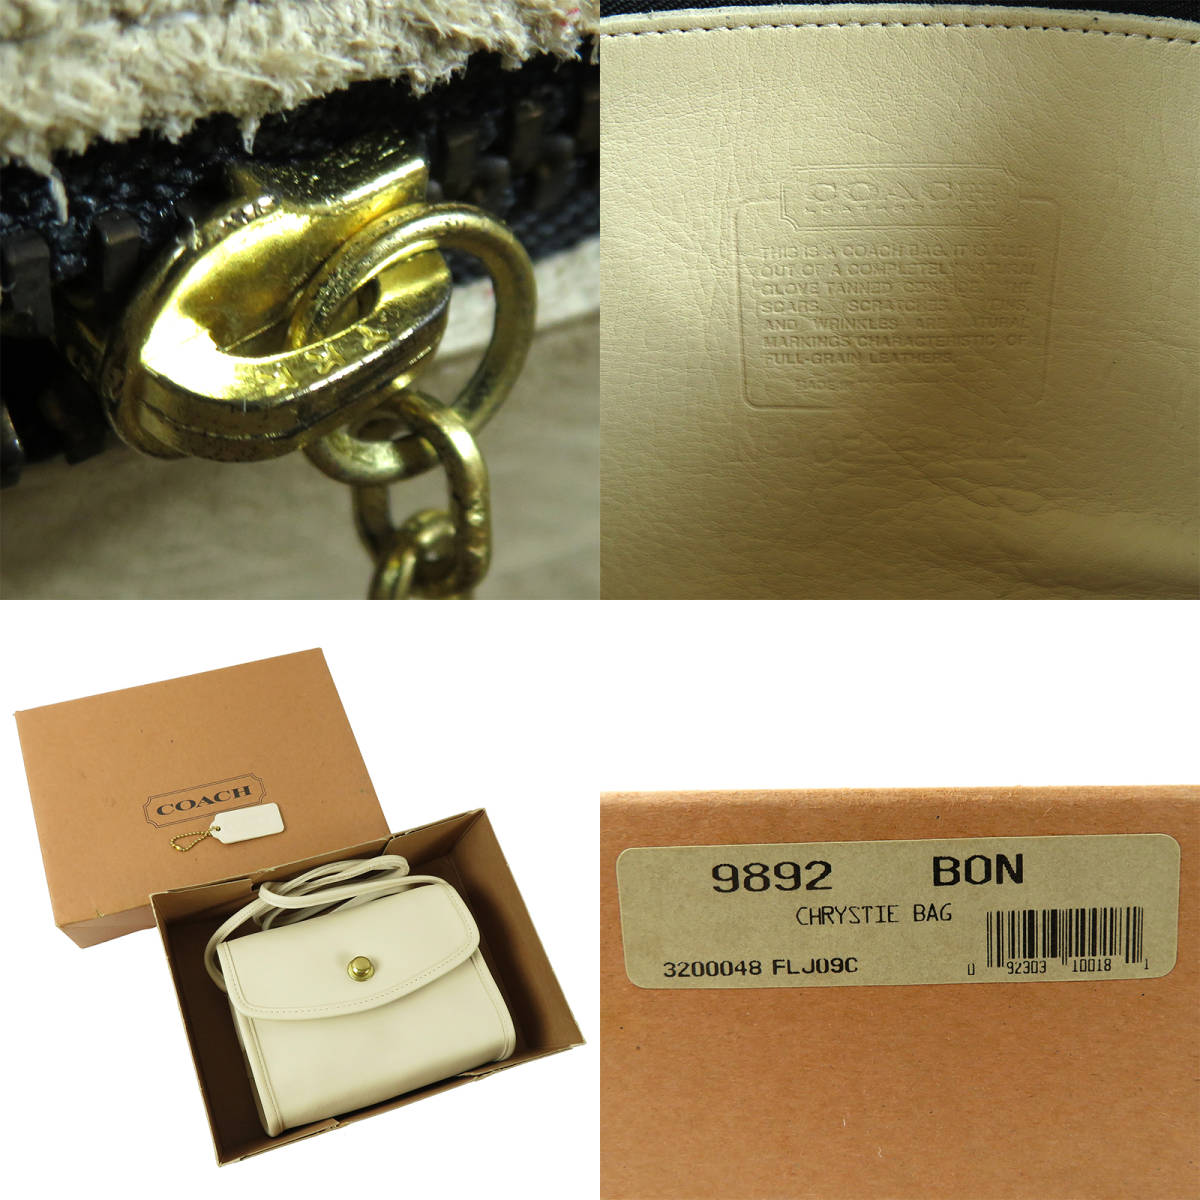  unused Coach Old Coach Chris ti bag shoulder bag 9892 ivory glove tan leather diagonal .. box attaching free shipping 